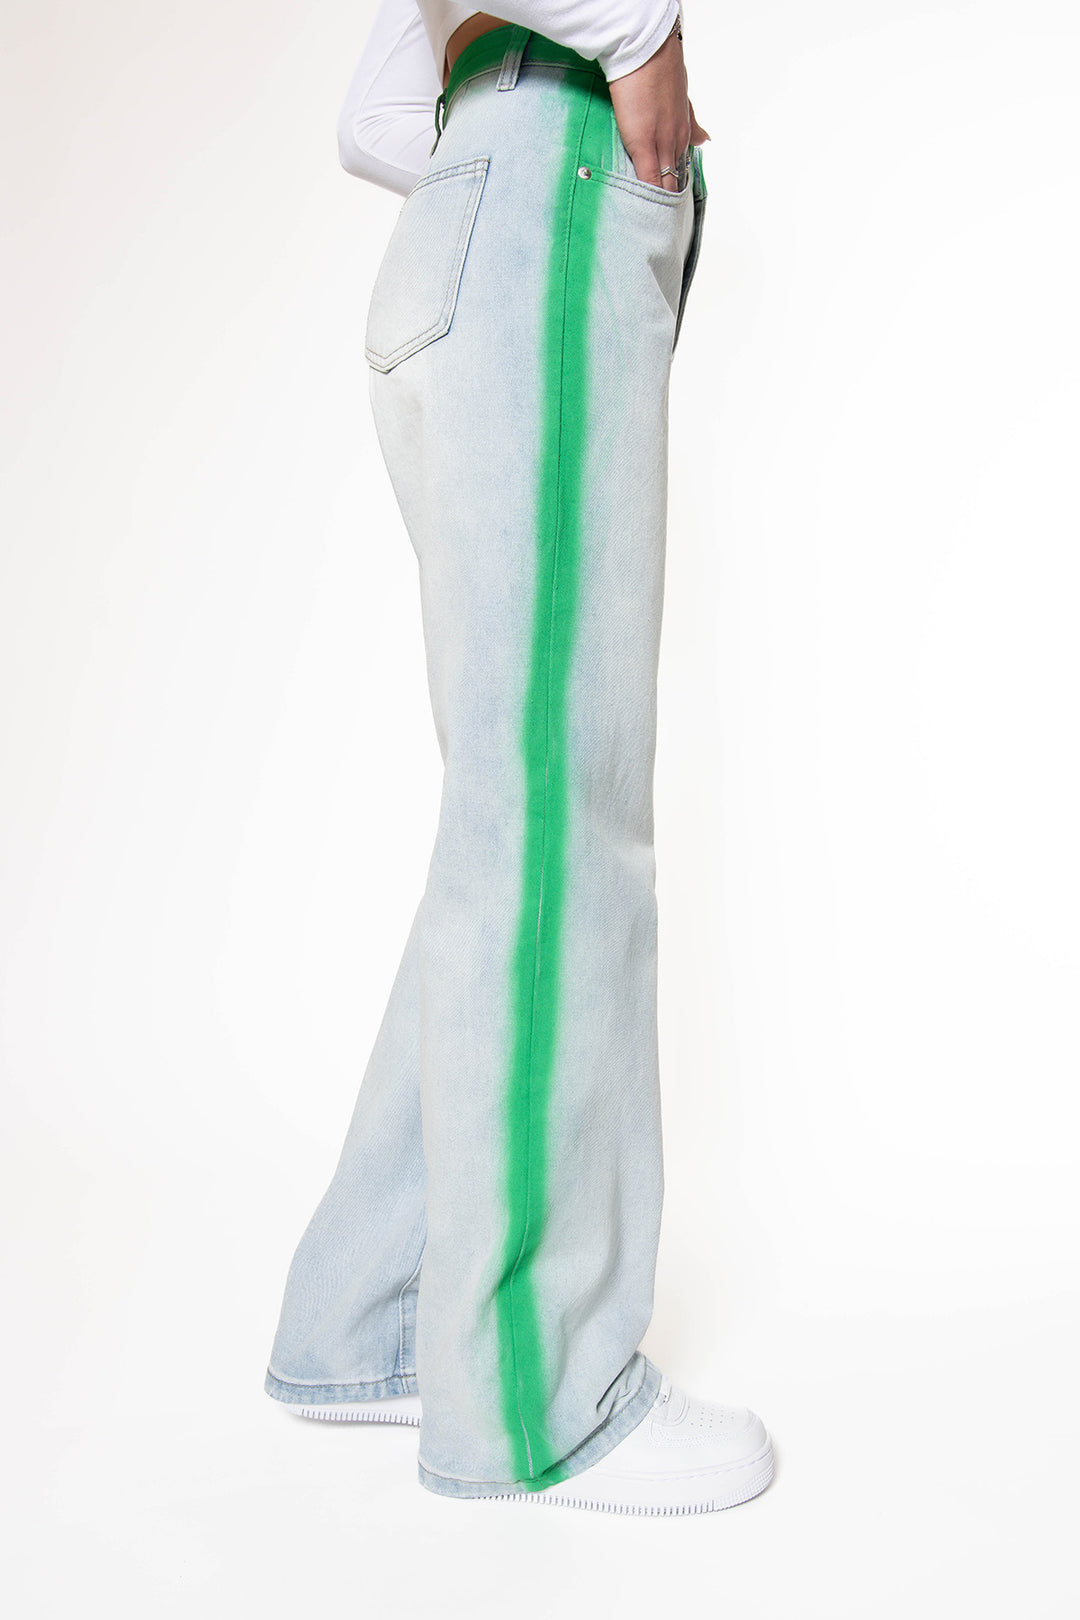 Ineke Green Striped Straight Leg Jeans Jeans Routines Fashion   